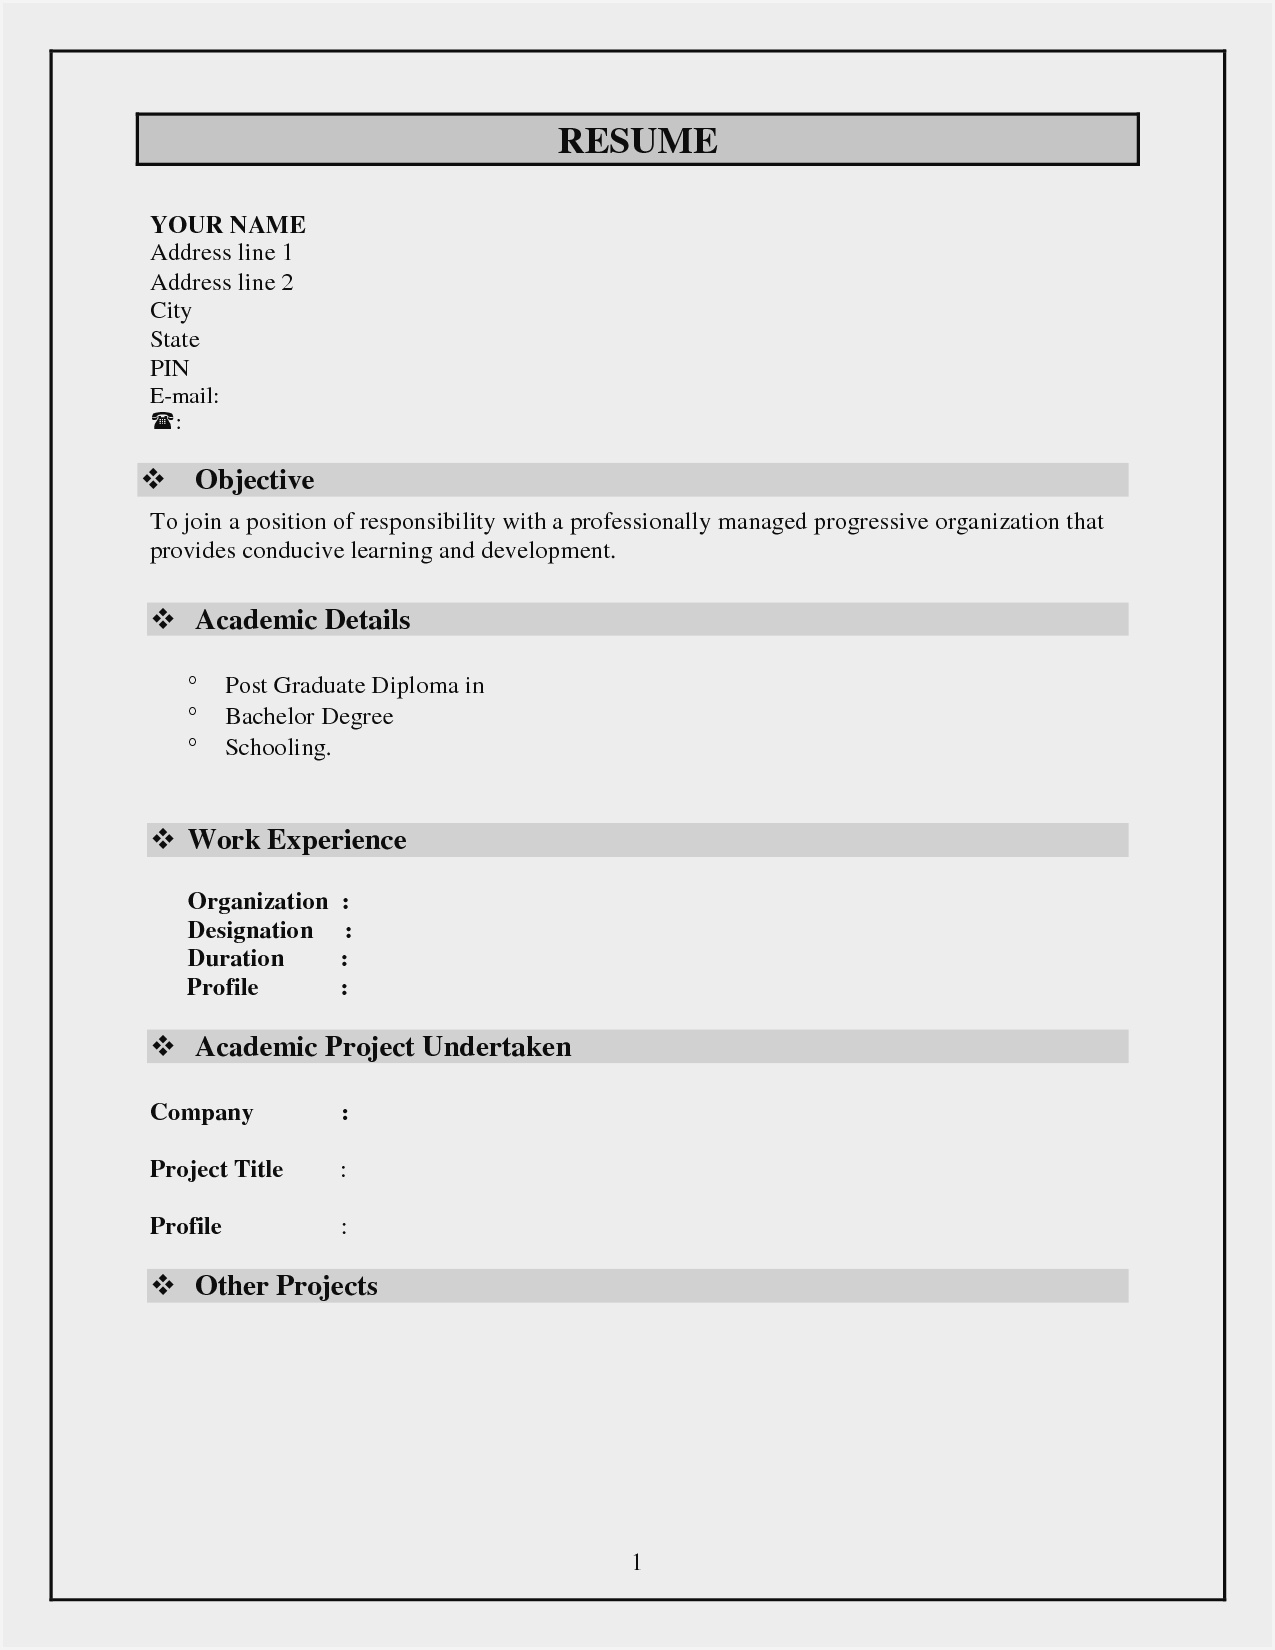 Resume Blank Format Free Download – Resume : Resume Sample #2712 For Free Blank Cv Template Download